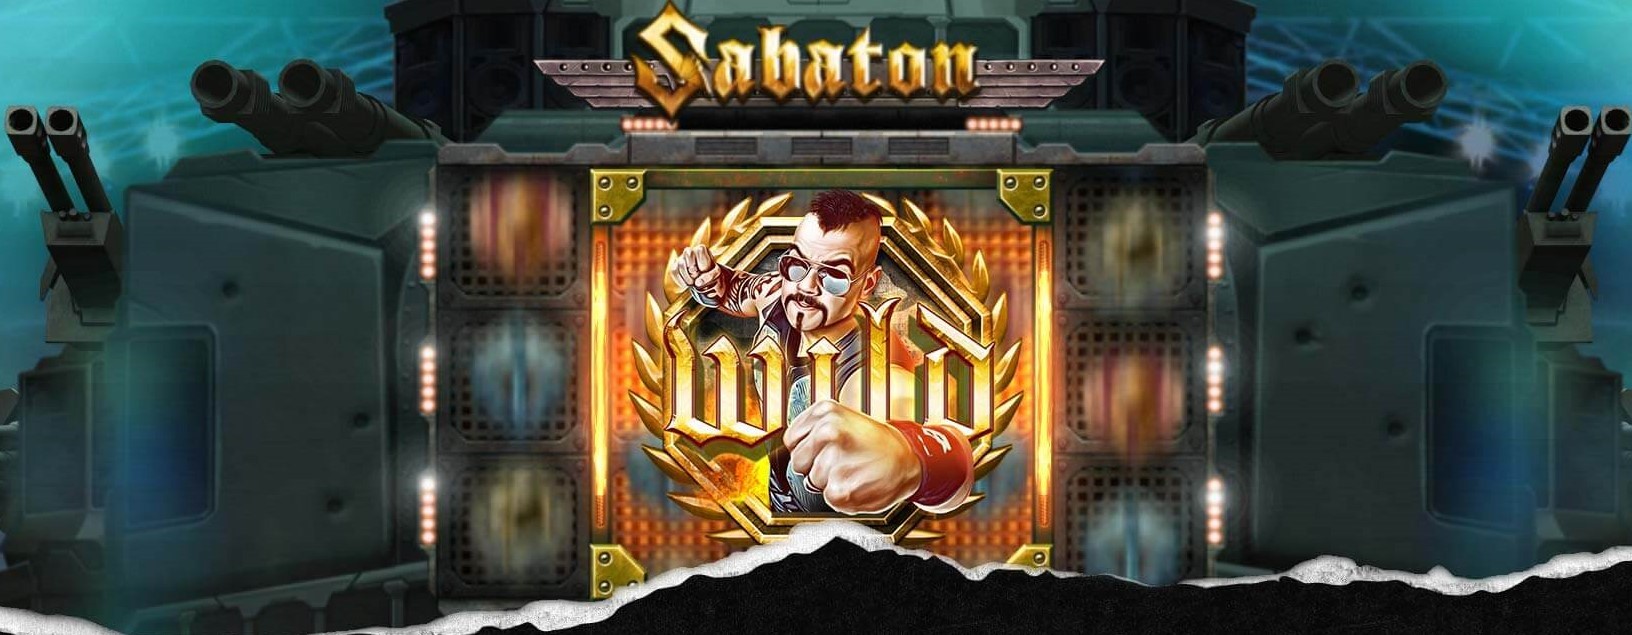 Slot Rock Sabaton